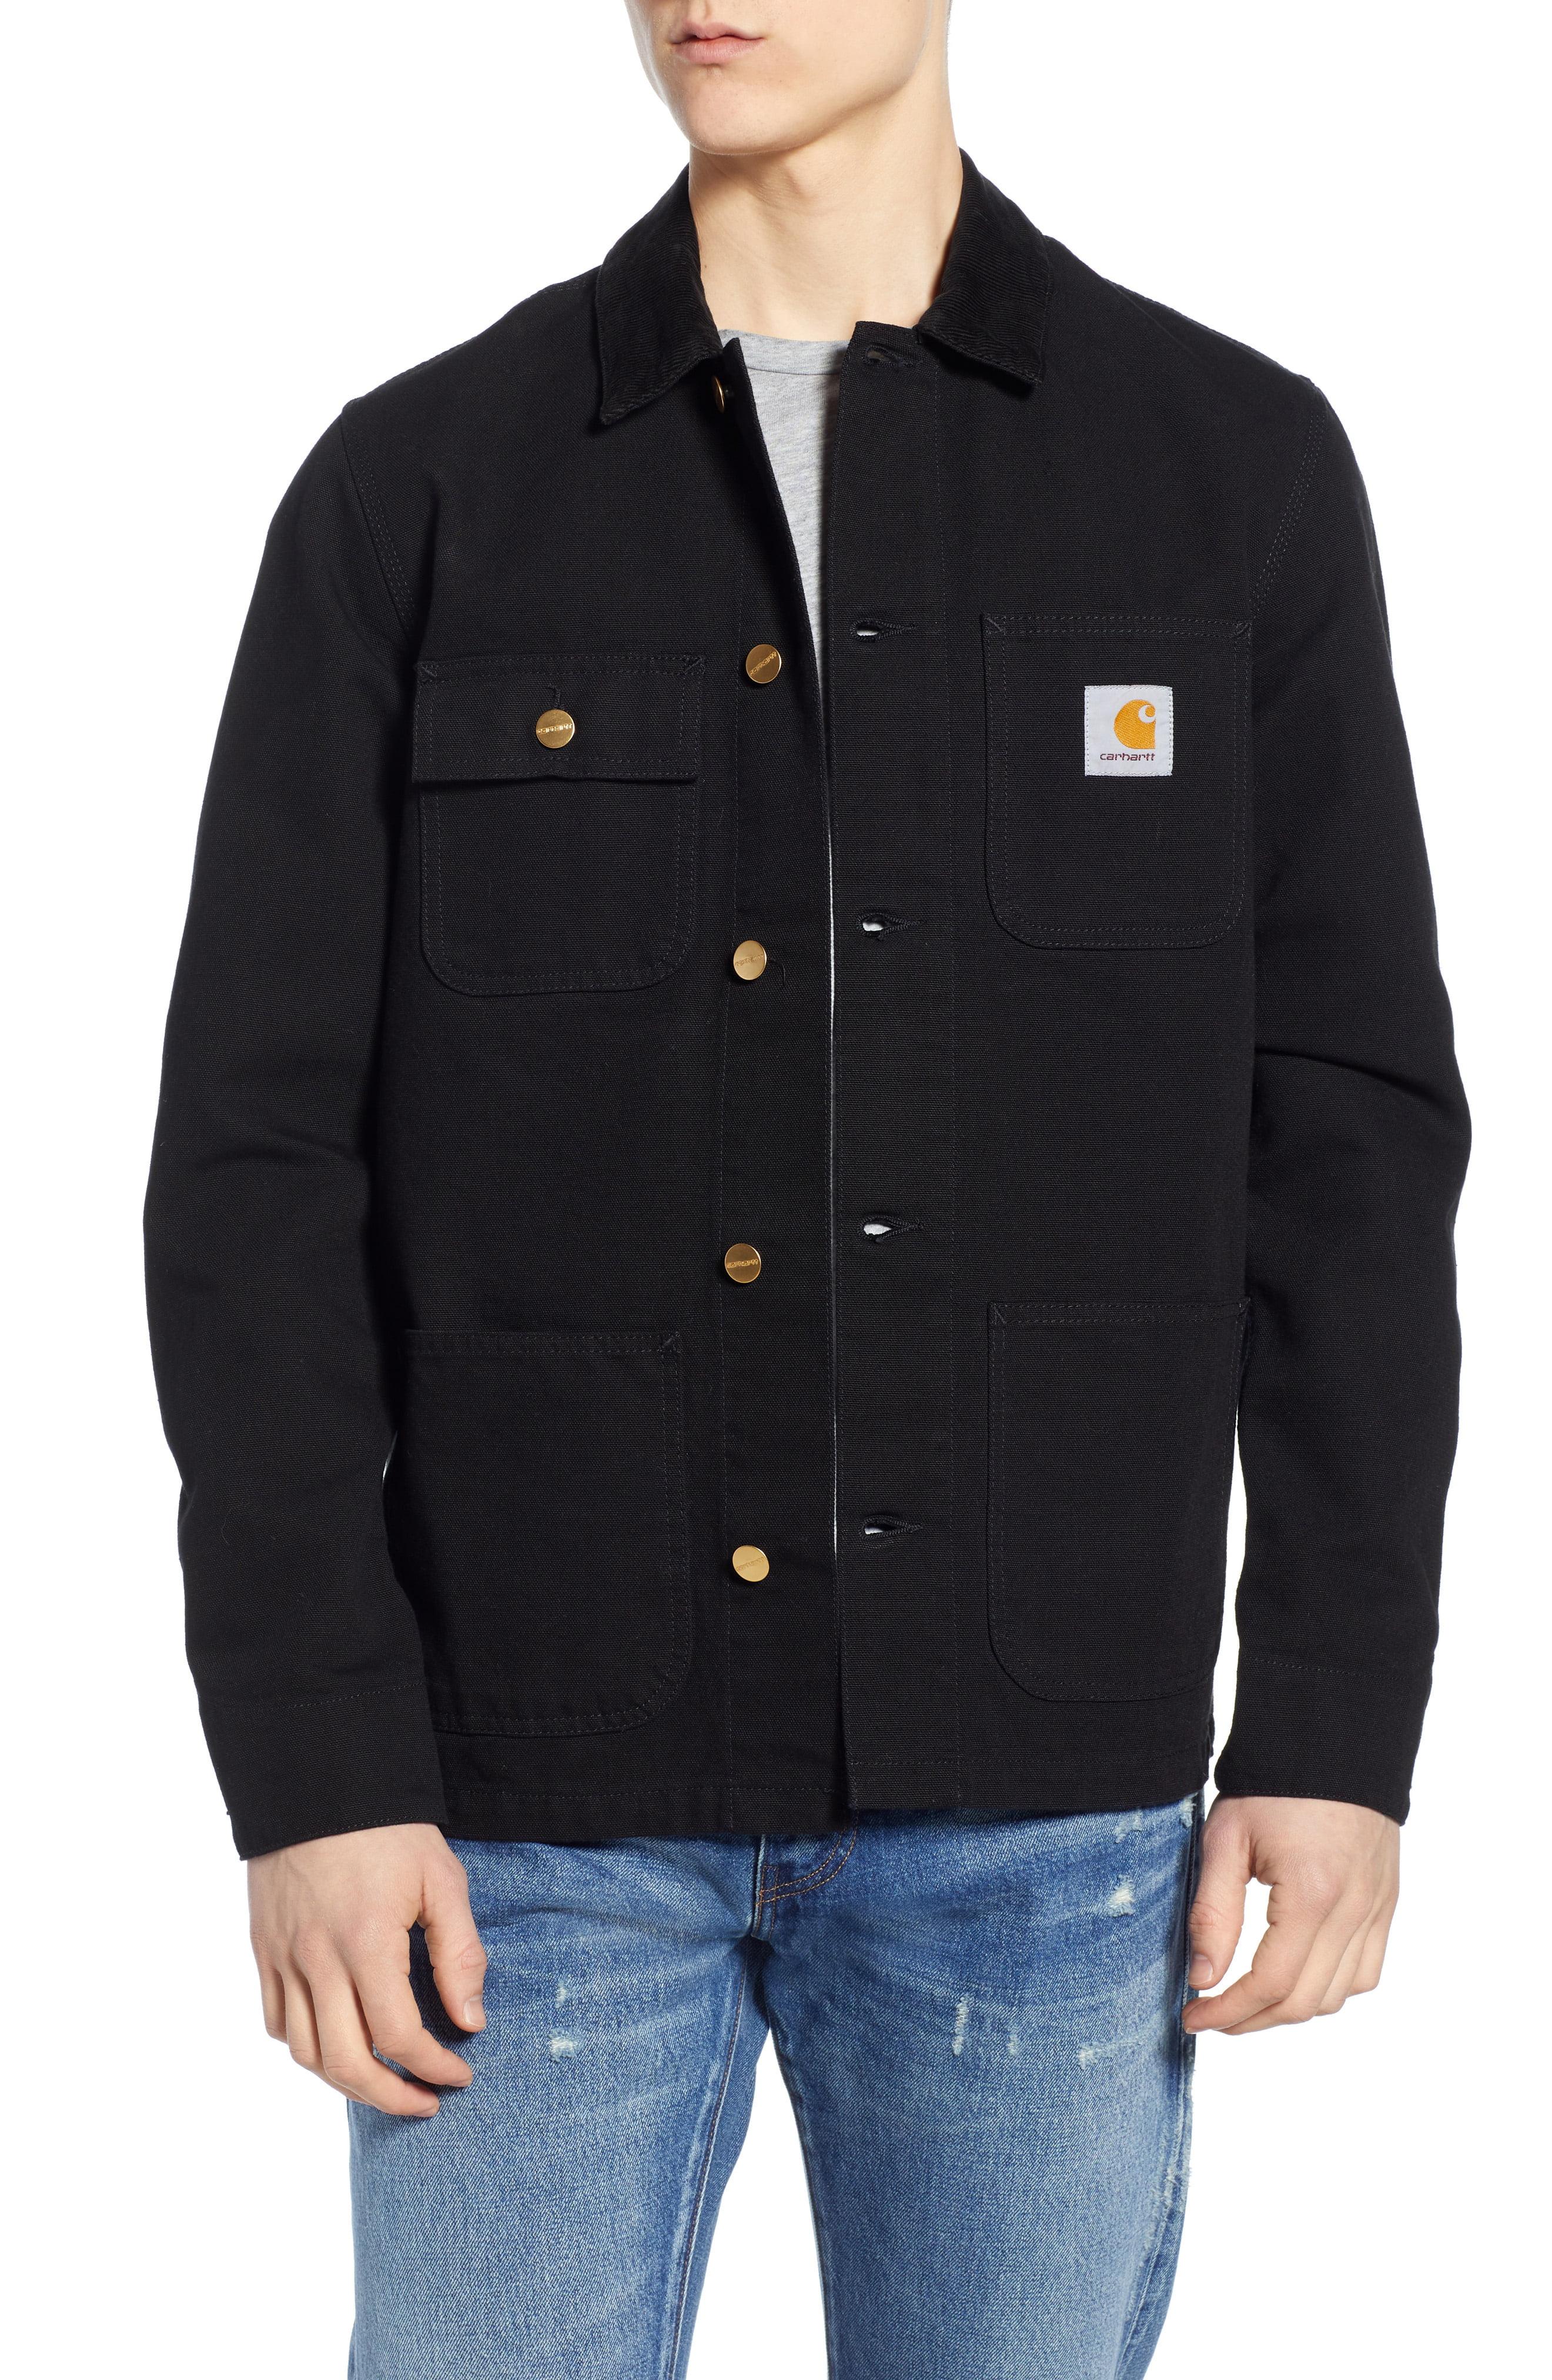 Lyst - Carhartt WIP Michigan Coat in Black for Men